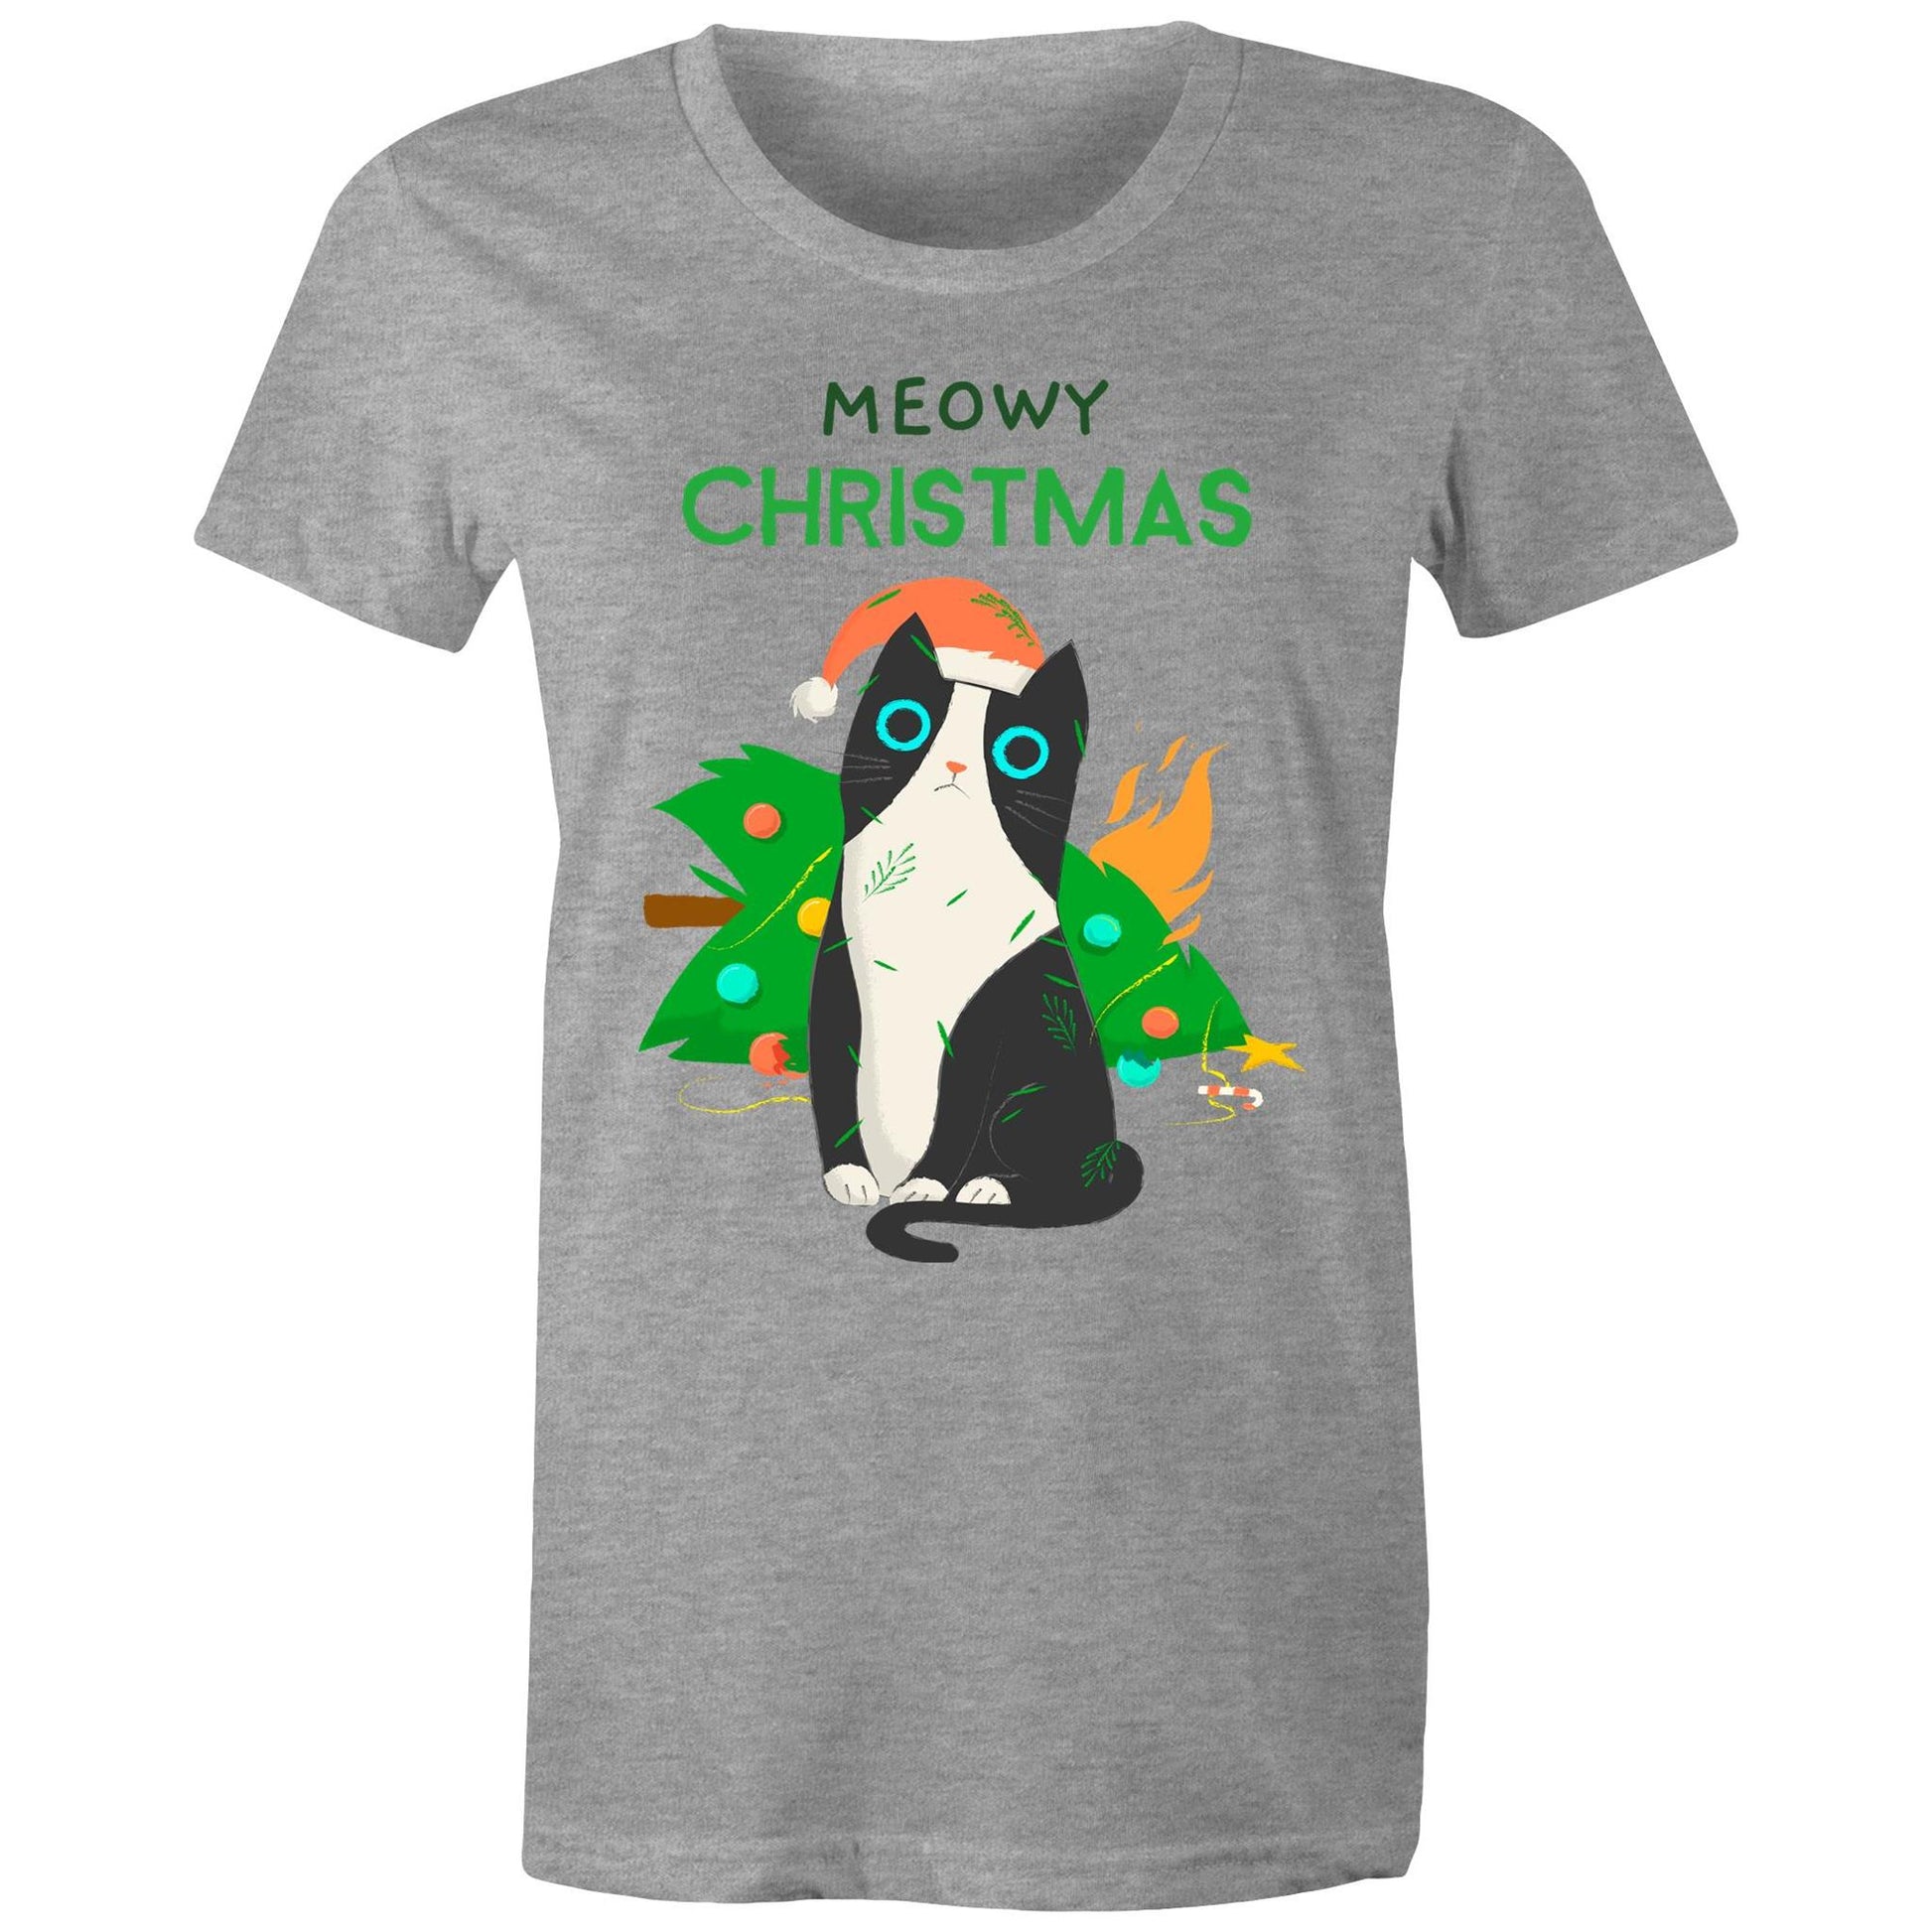 Meowy Christmas - Womens T-shirt Grey Marle Christmas Womens T-shirt Merry Christmas